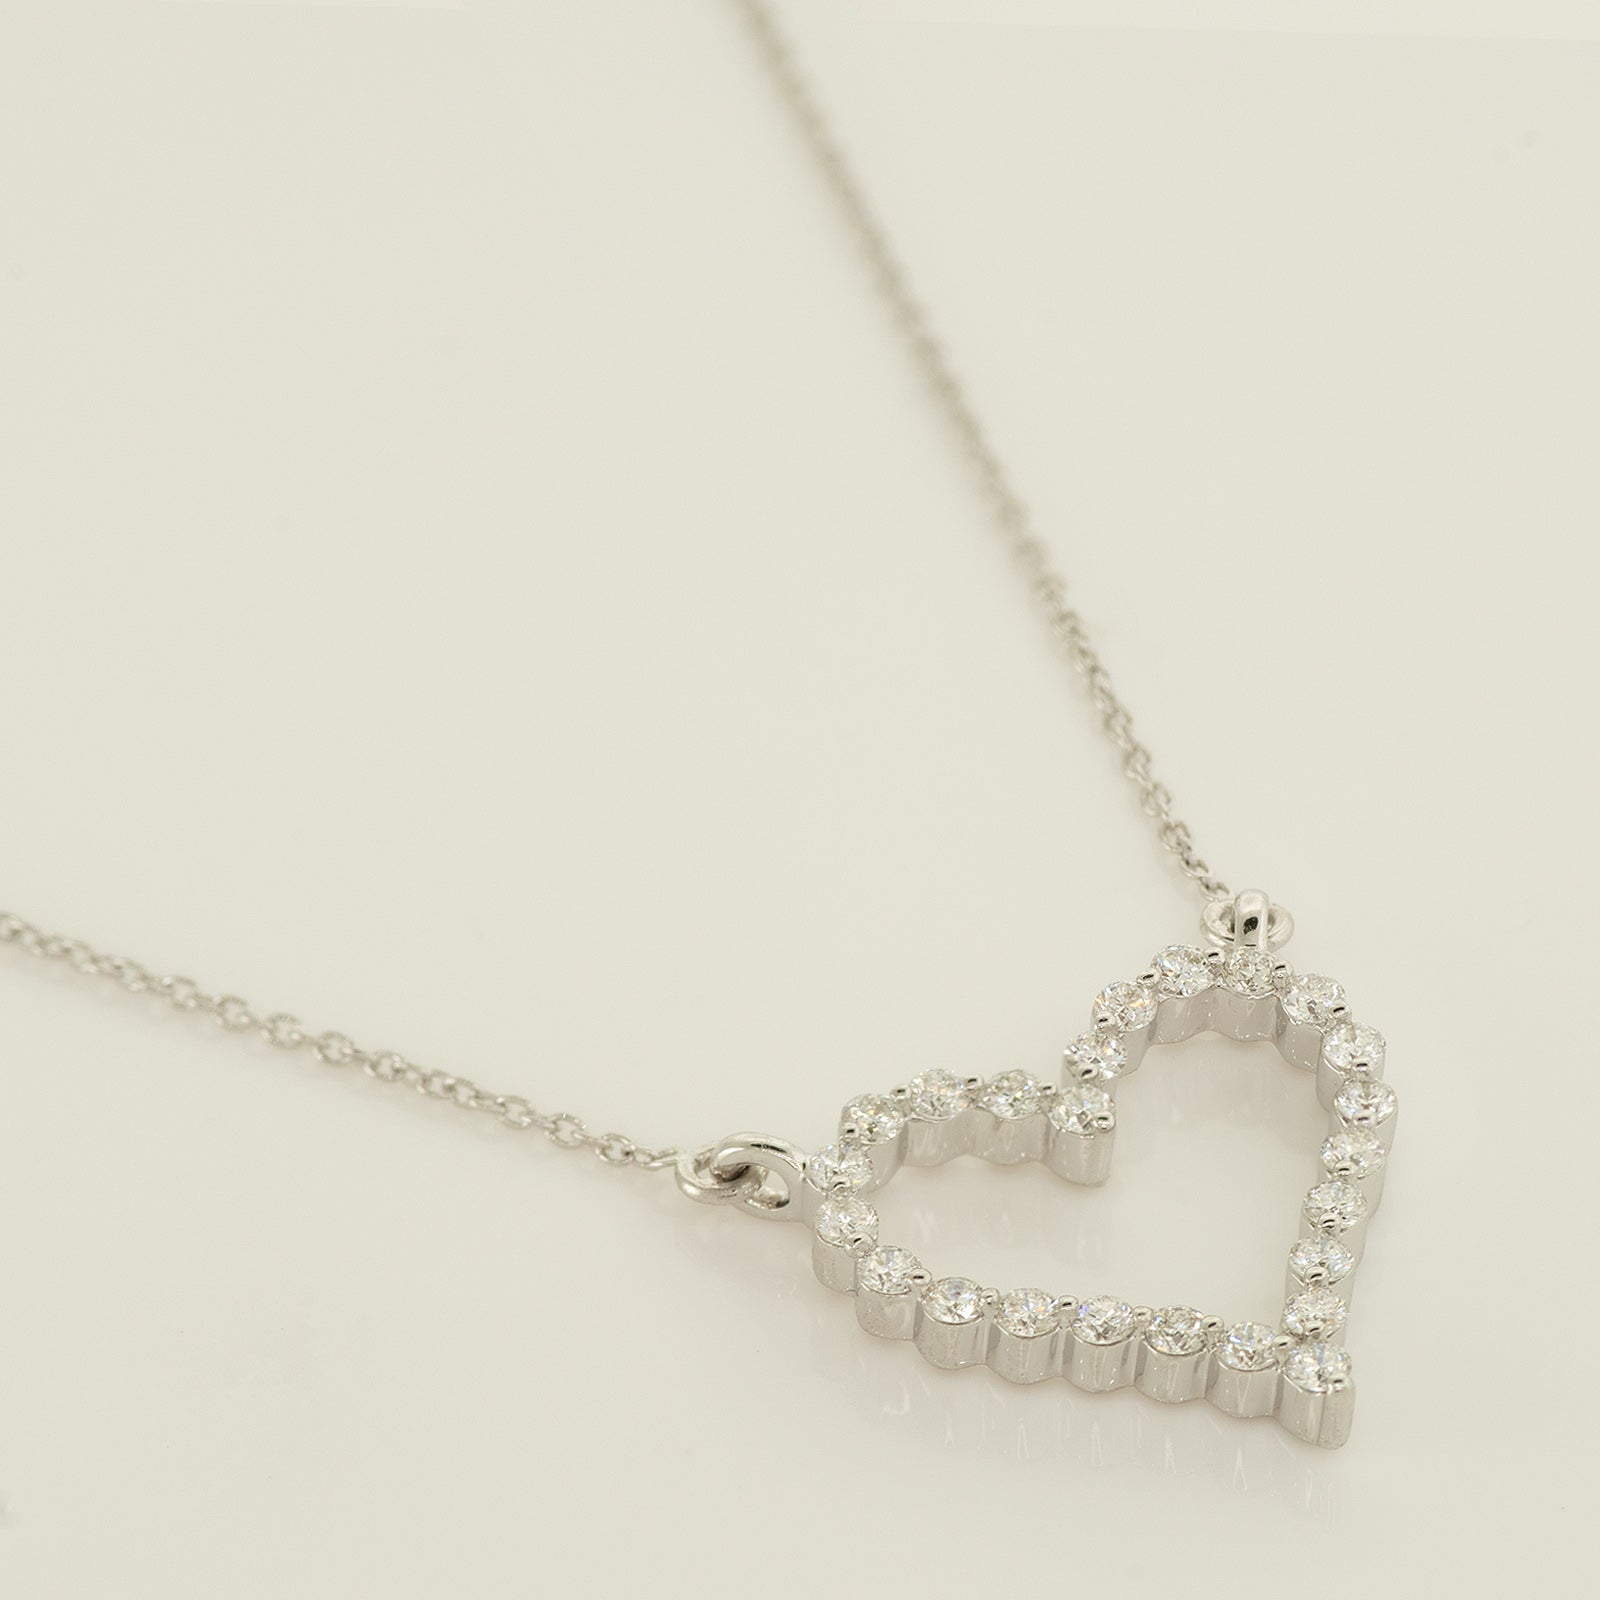 White Gold Heart Diamond Necklaces